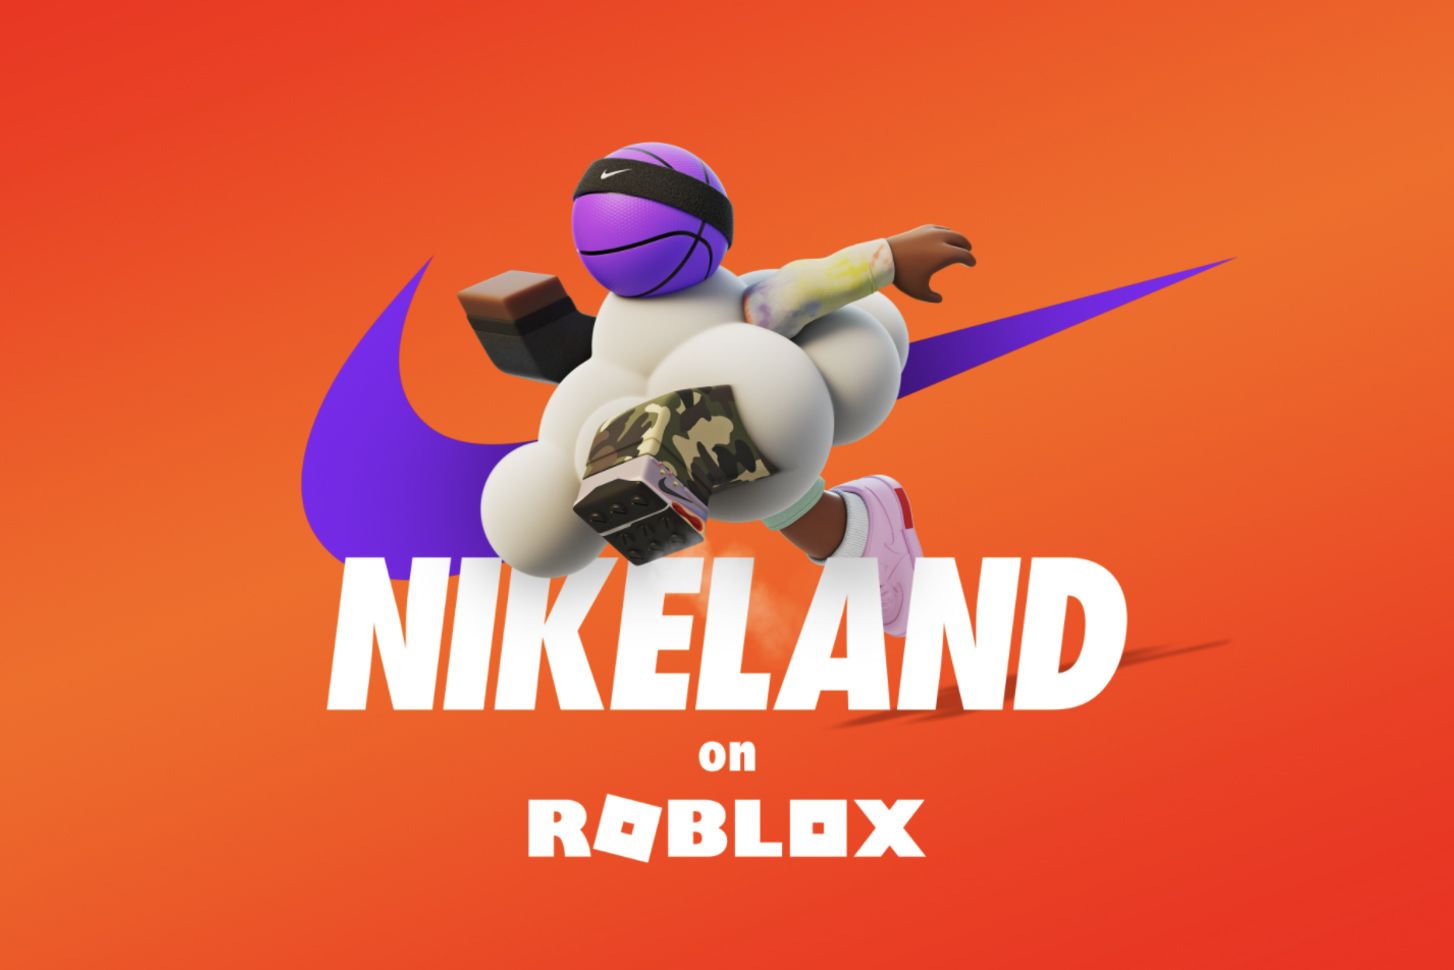 Nike x Roblox 'NIKELAND' Digital World